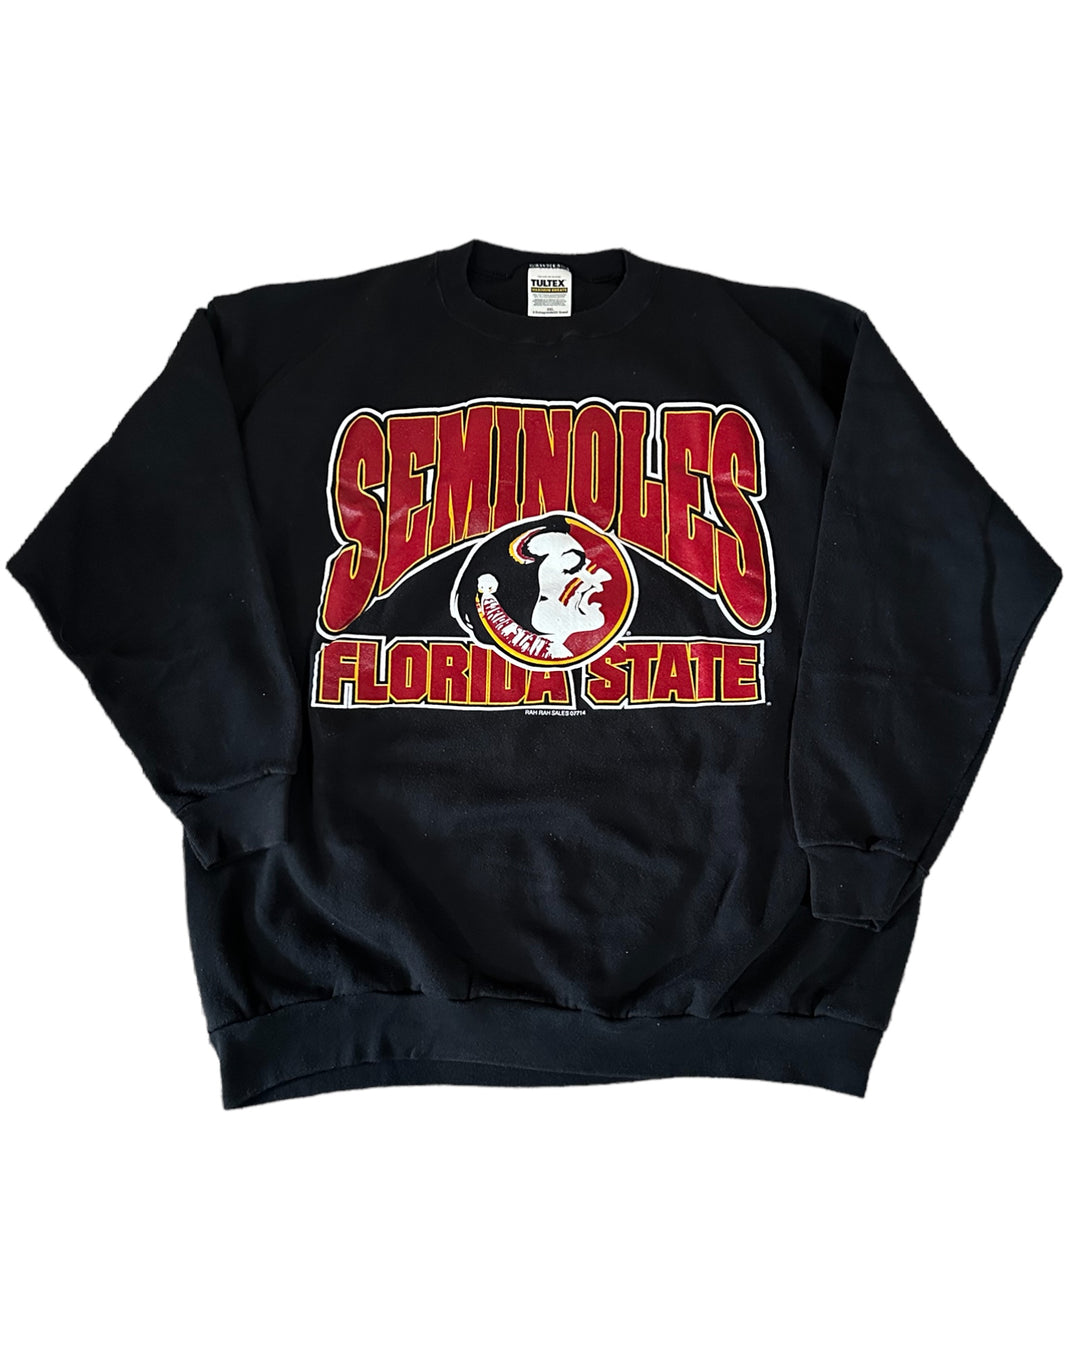 FSU Vintage Sweatshirt